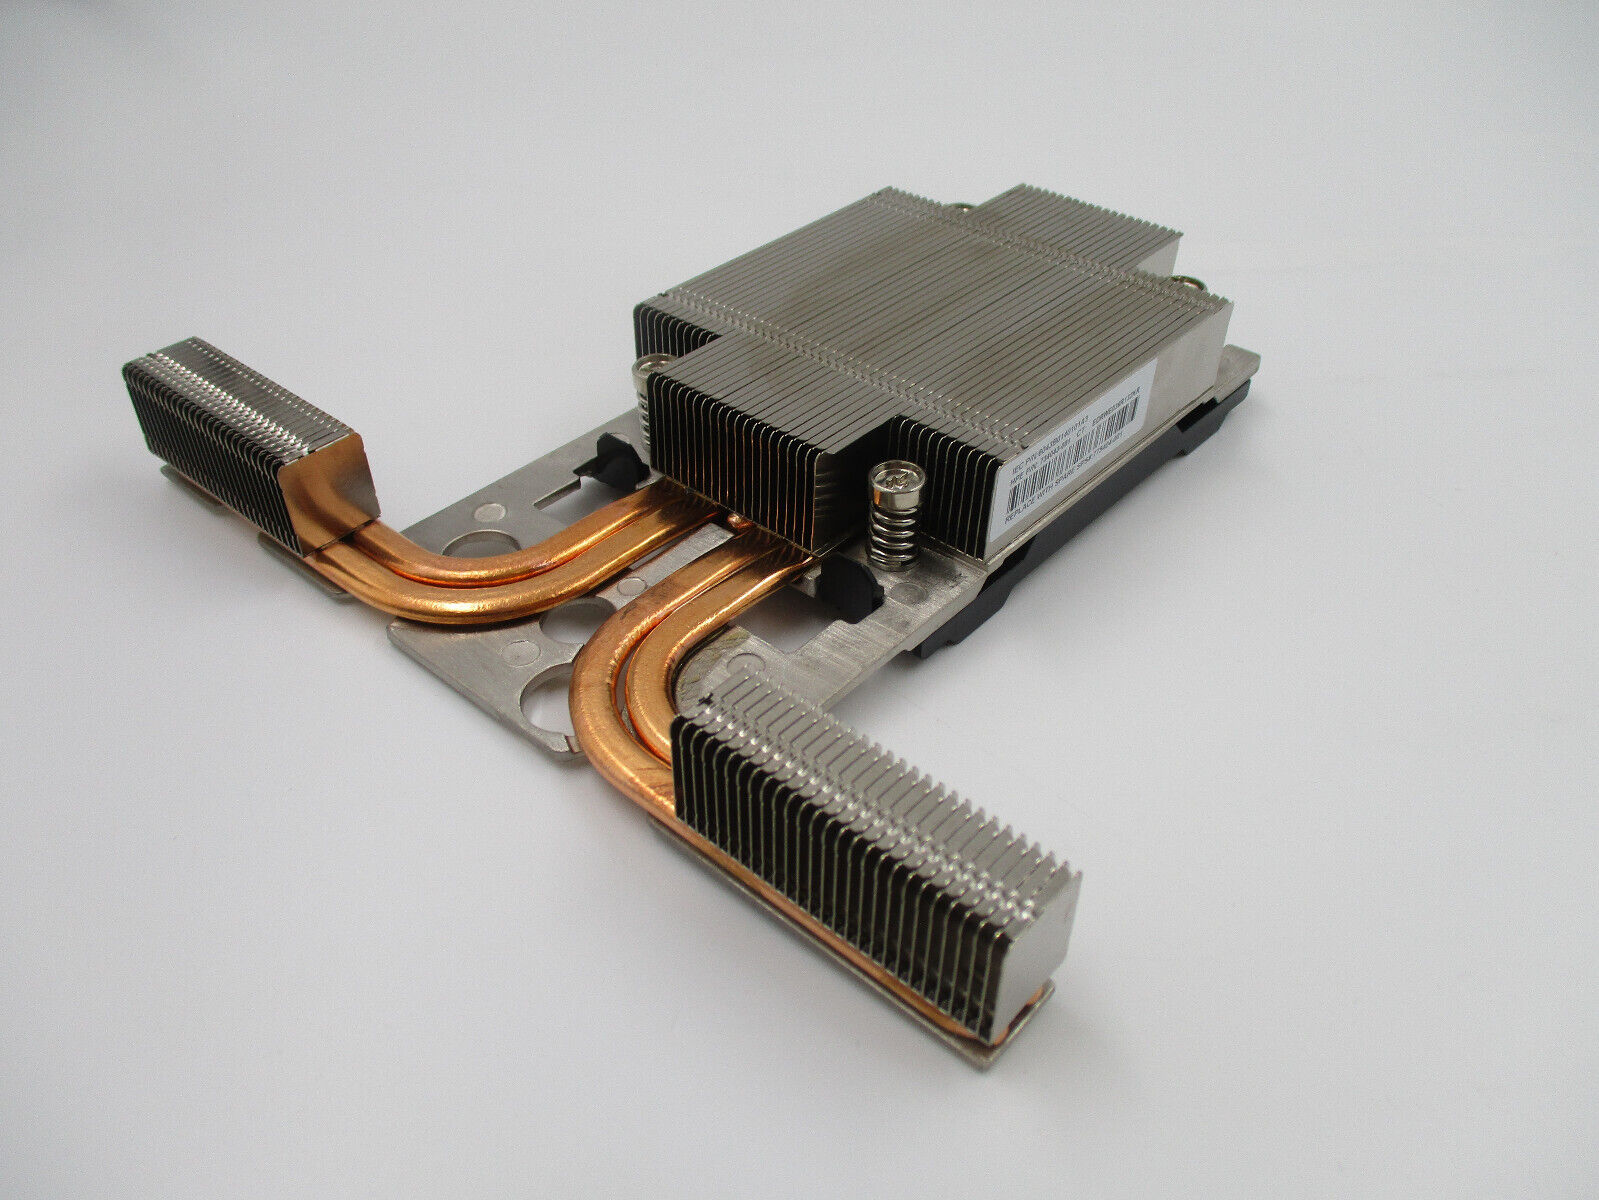 HPE DL360 Gen9 High-Performance Heatsink P/N: 775404-001 Tested Working